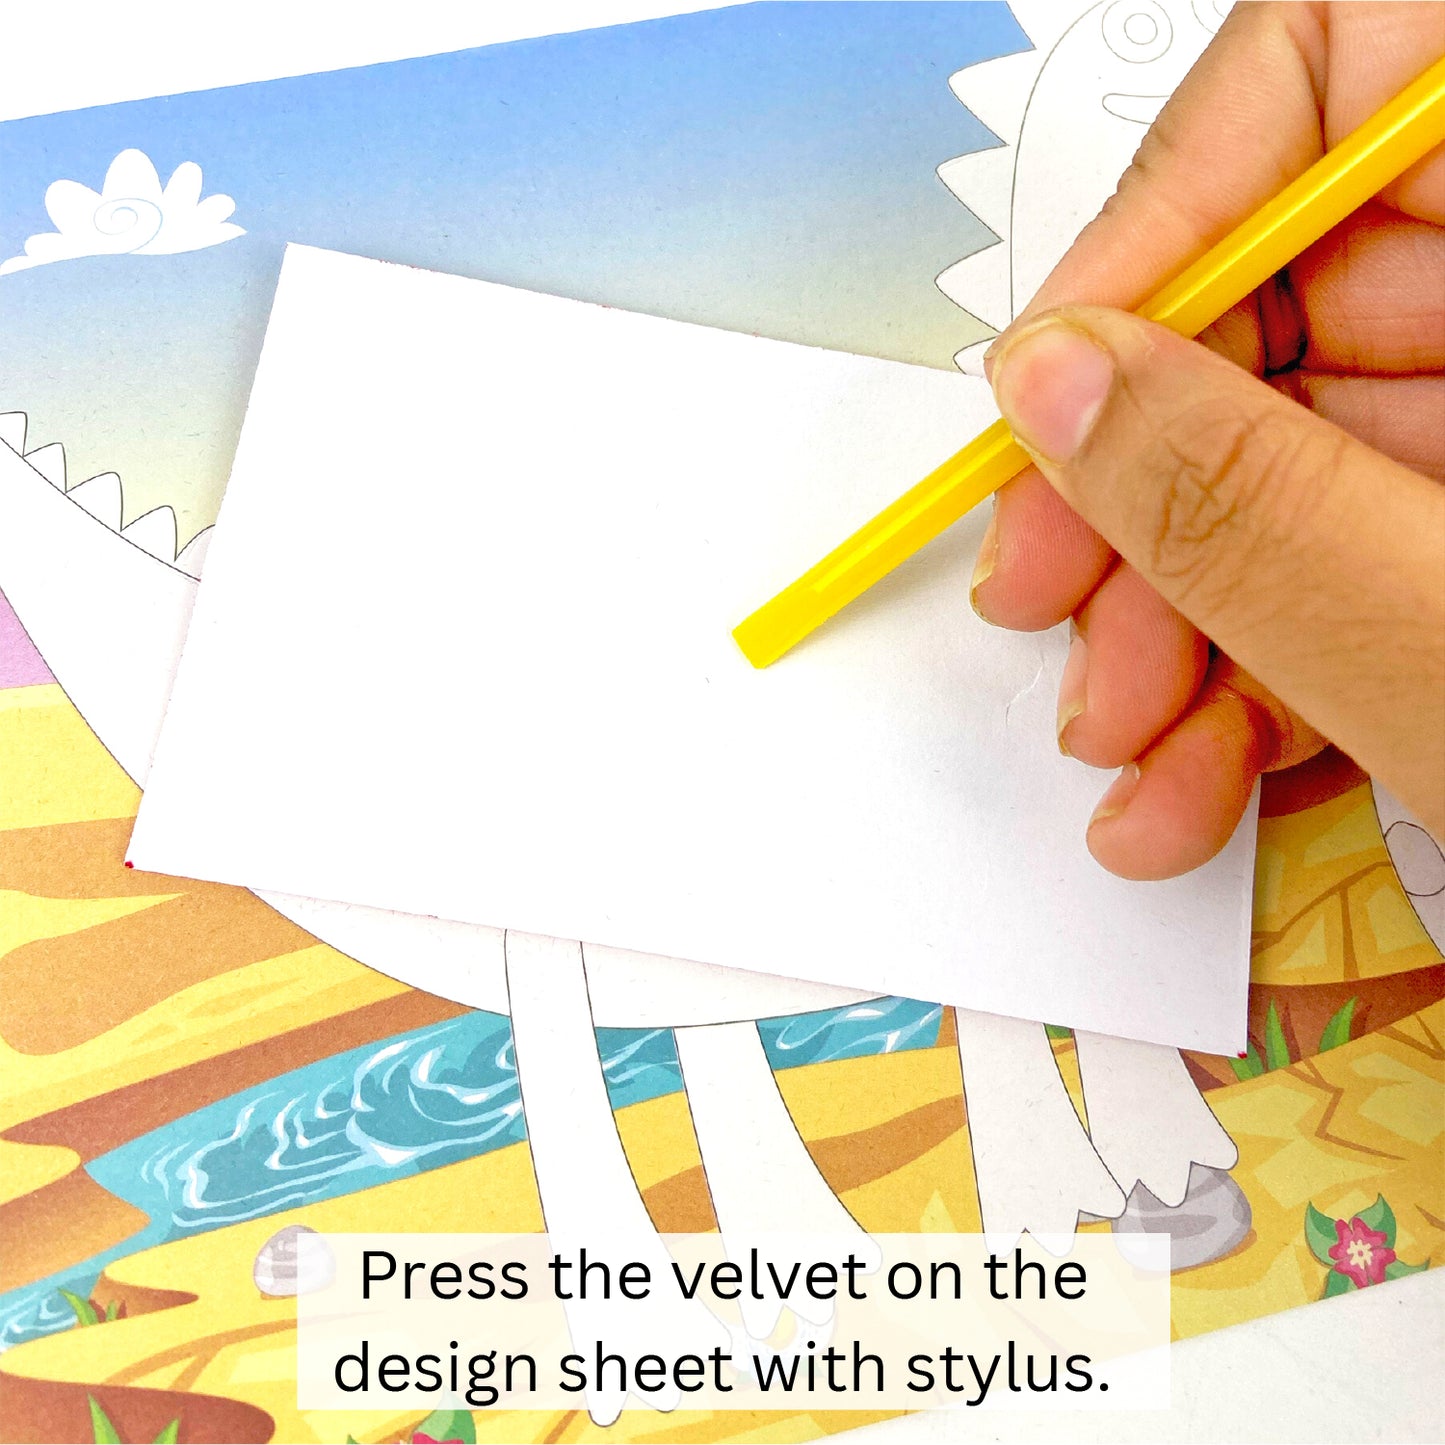 Velvet Art Book - New Edition (Dinosaur World) | 4 Design Cards | 15 Piece Set | Embossed 3D Craft